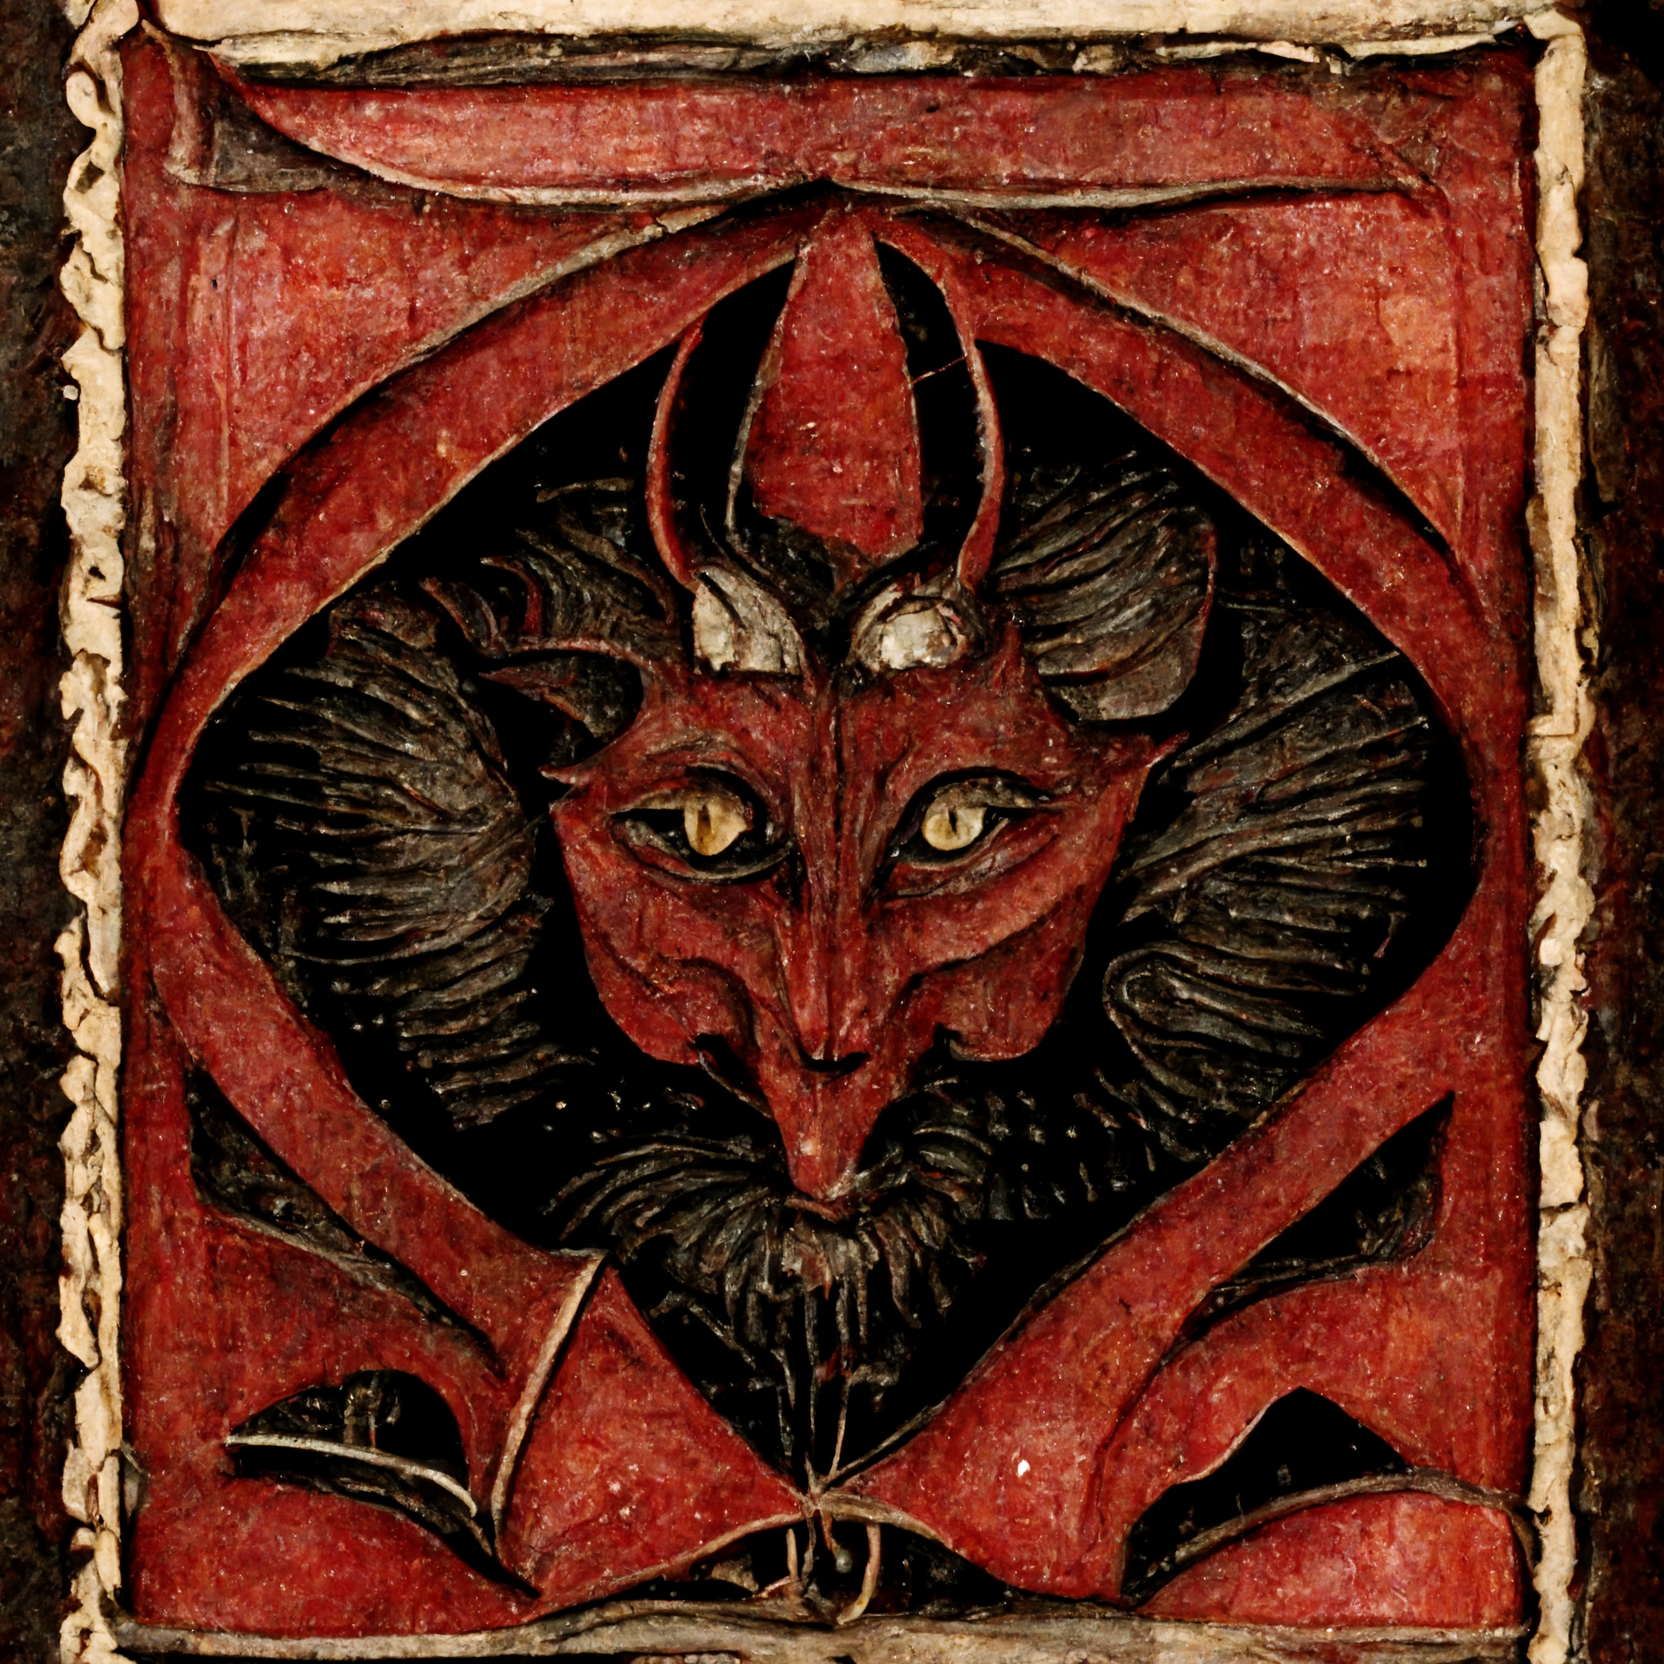 Ulysses_Black_devil_in_the_style_of_a_medieval_manuscript_4149337e-bcd4-406c-b543-7ffb85c45830.png